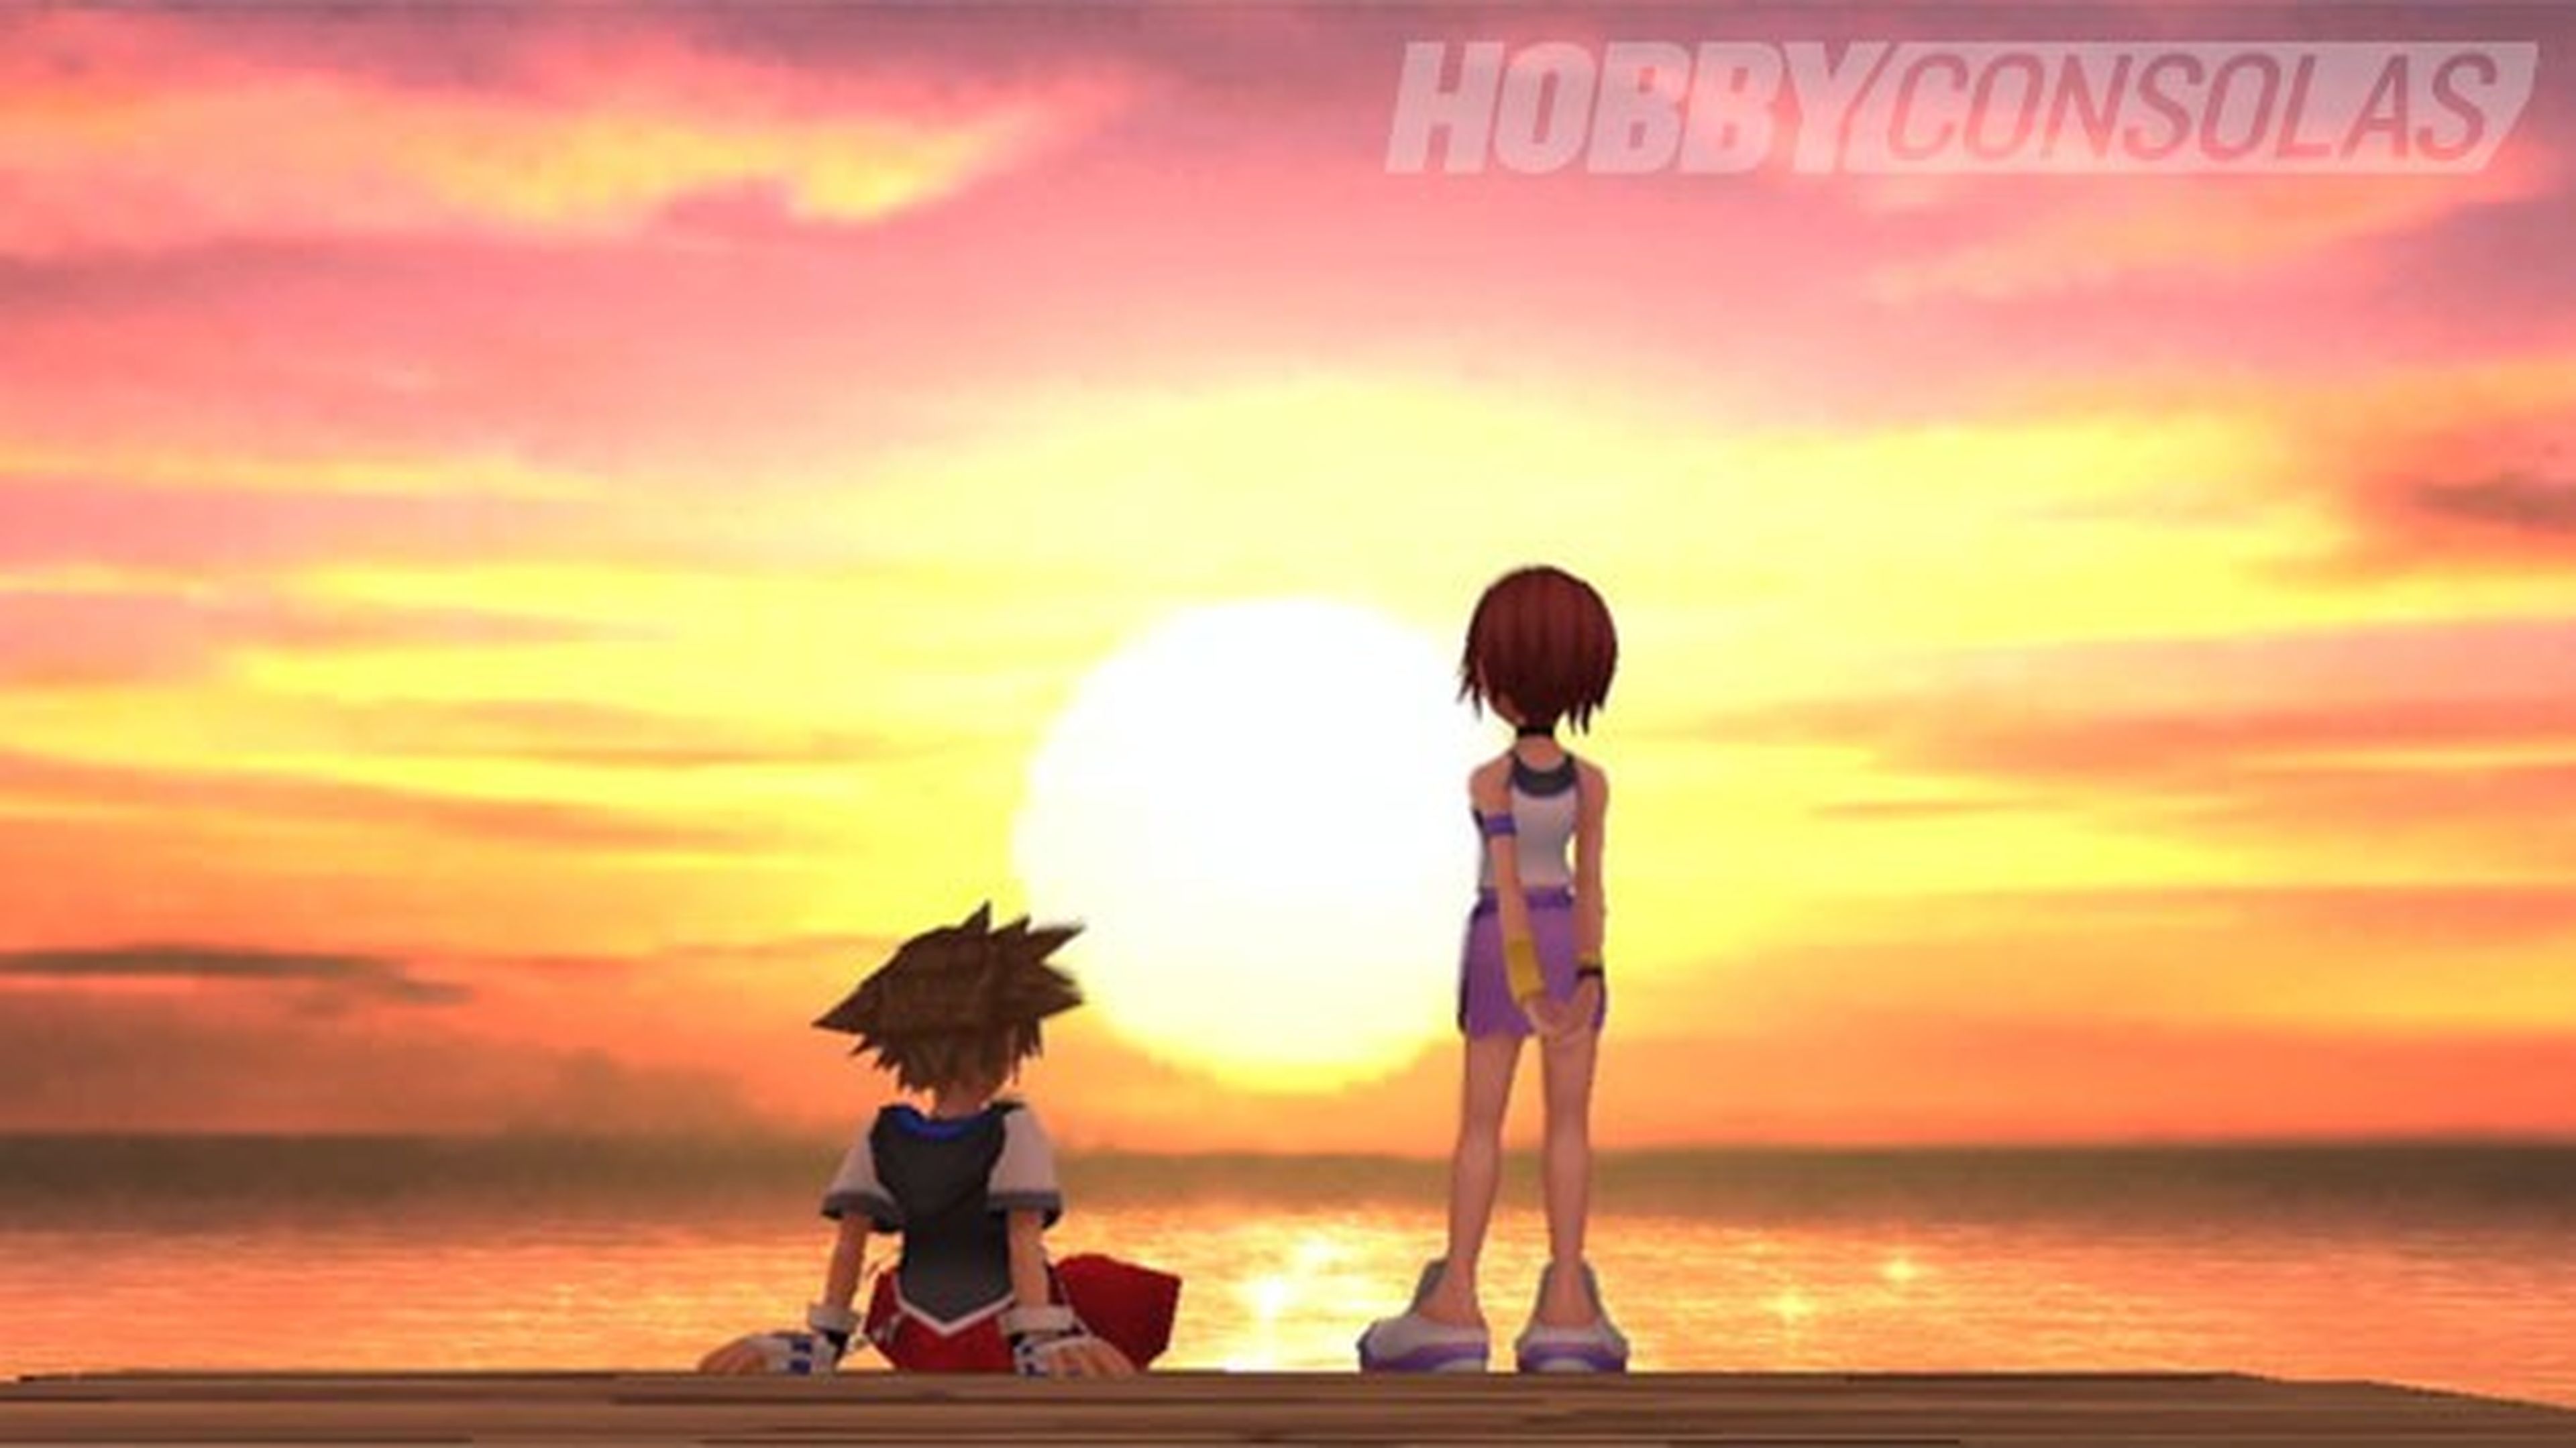 Kingdom Hearts HD 1.5 Remix incluirá voces en inglés